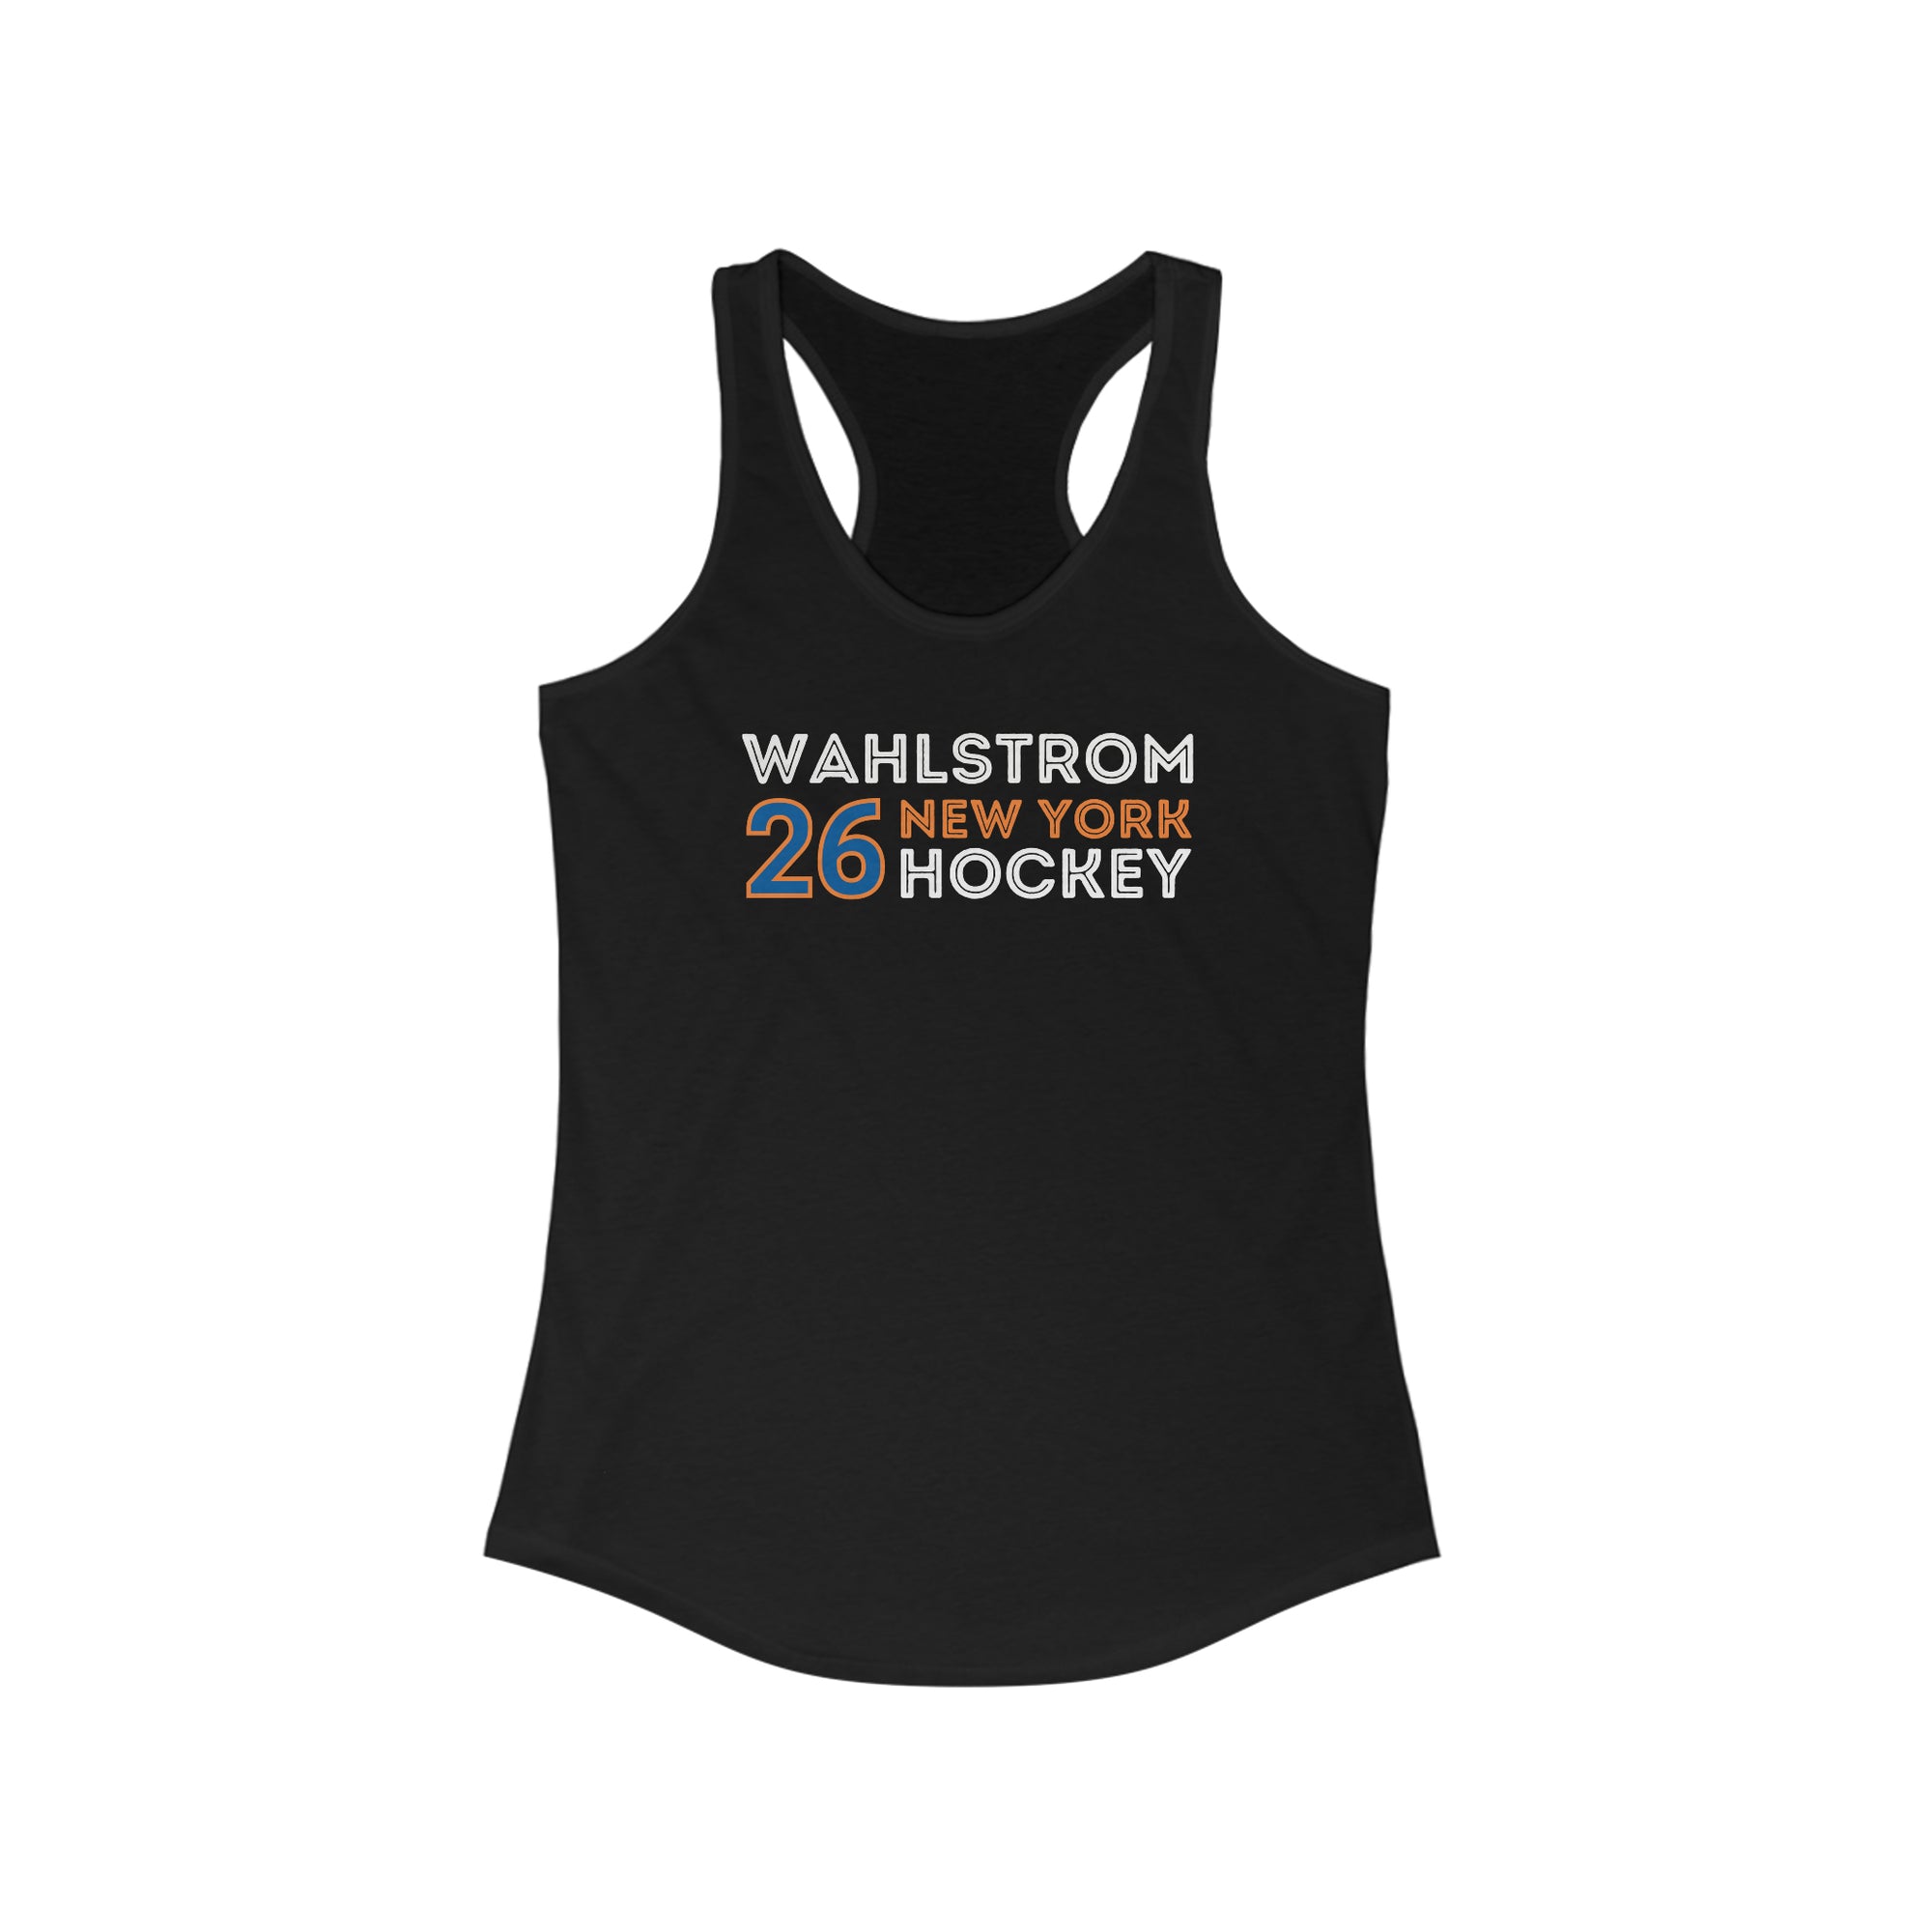 Wahlstrom 26 New York Hockey Grafitti Wall Design Women's Ideal Racerback Tank Top